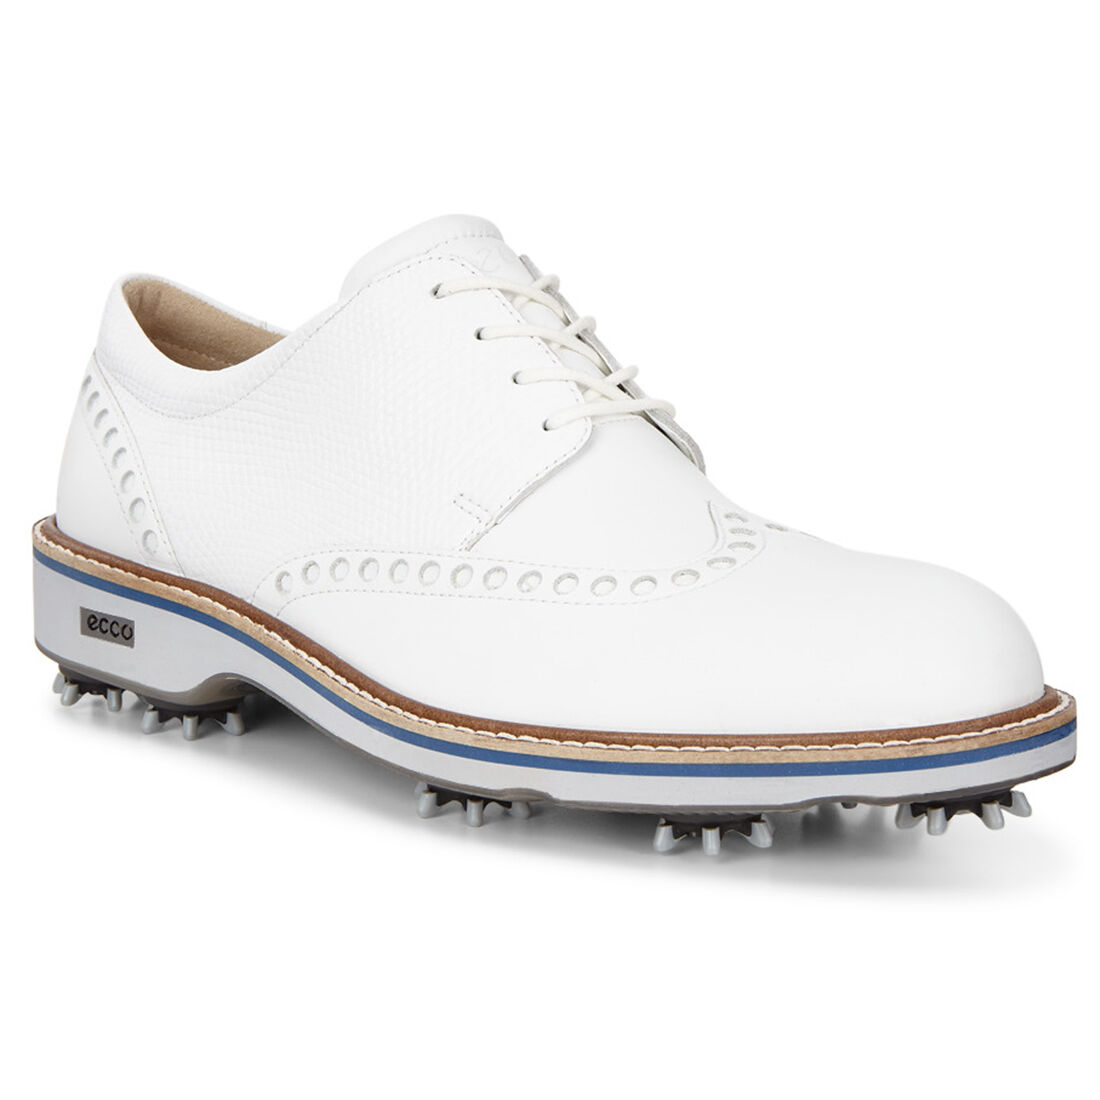 mens white golf shoes